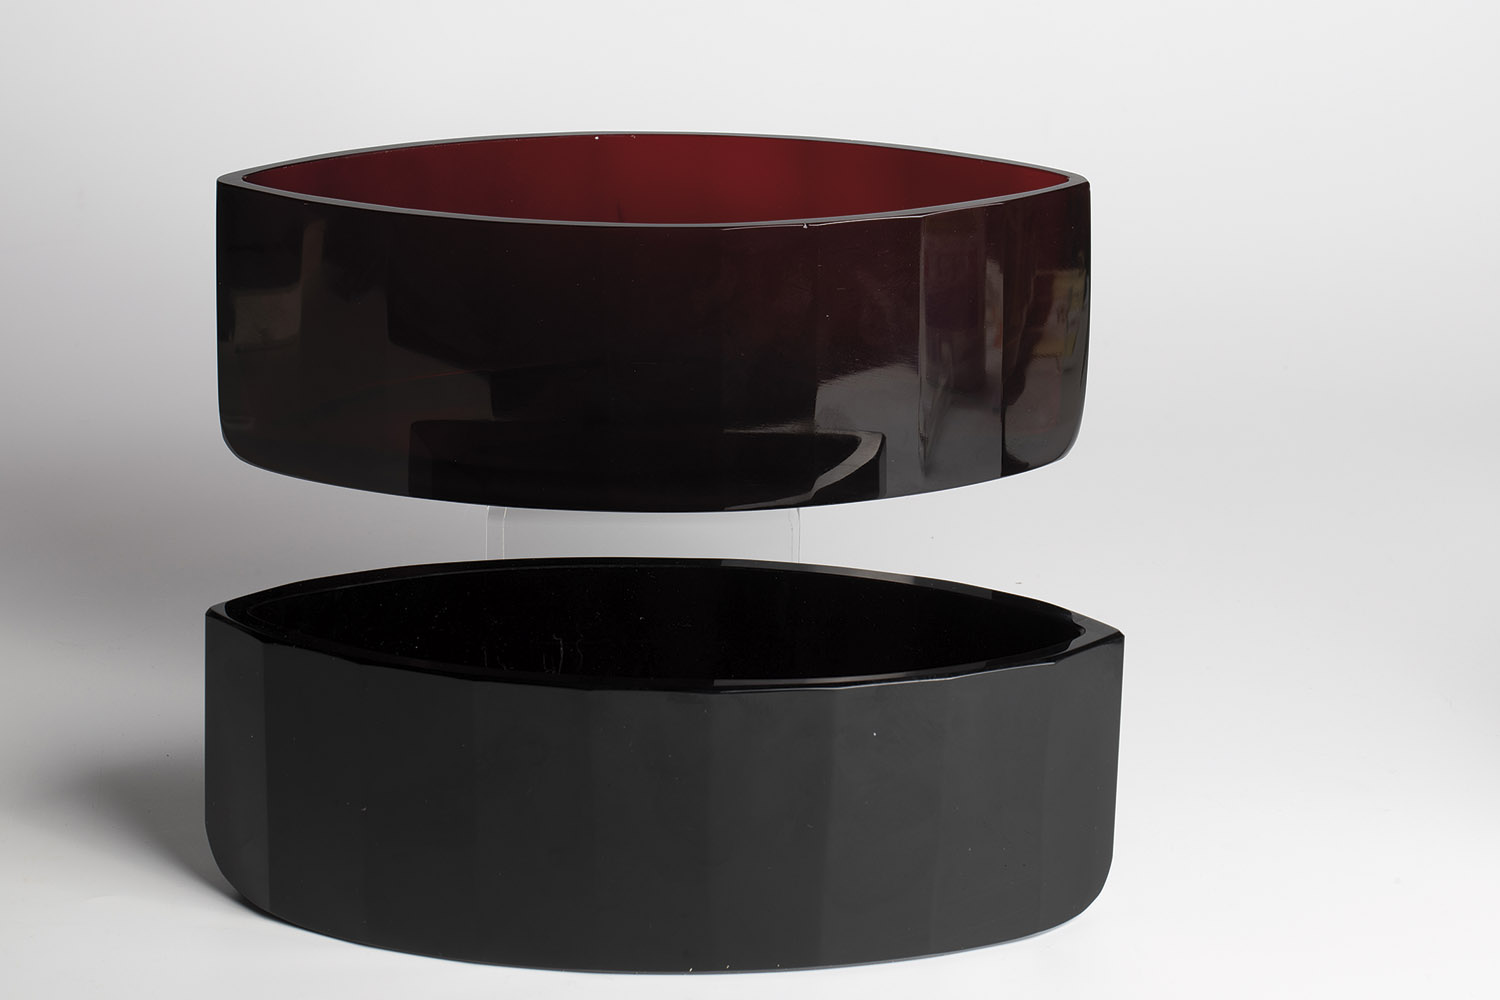 Two bowls Probably Josef Hoffmann (design), Wiener Werkstaette, L. Moser & Sons, Karlsbad (